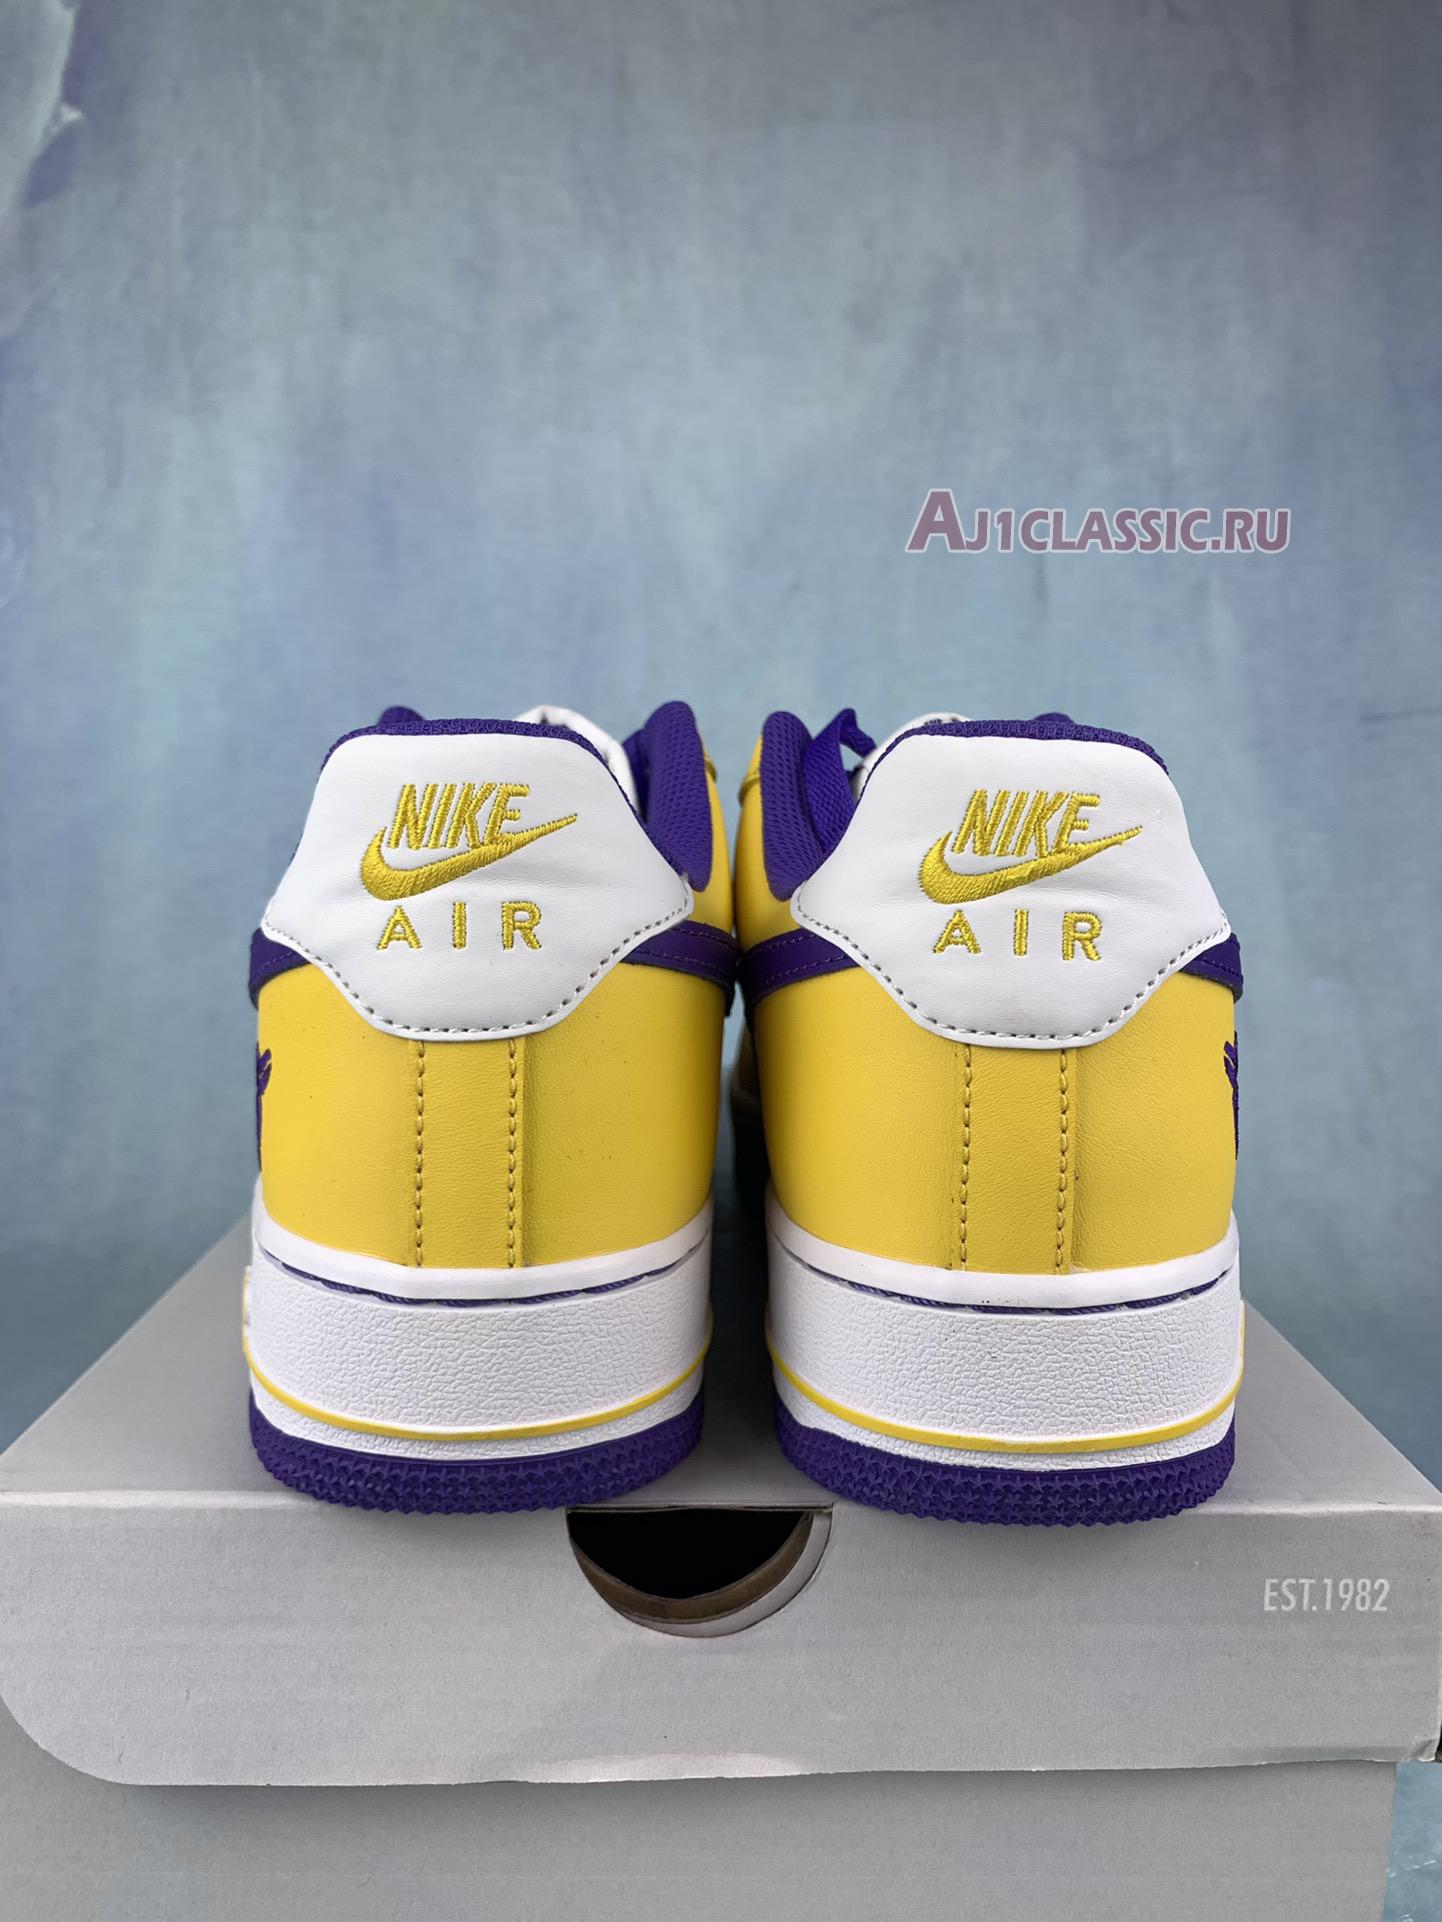 Nike Air Force 1 Low "Kobe Bryant" 314192-151